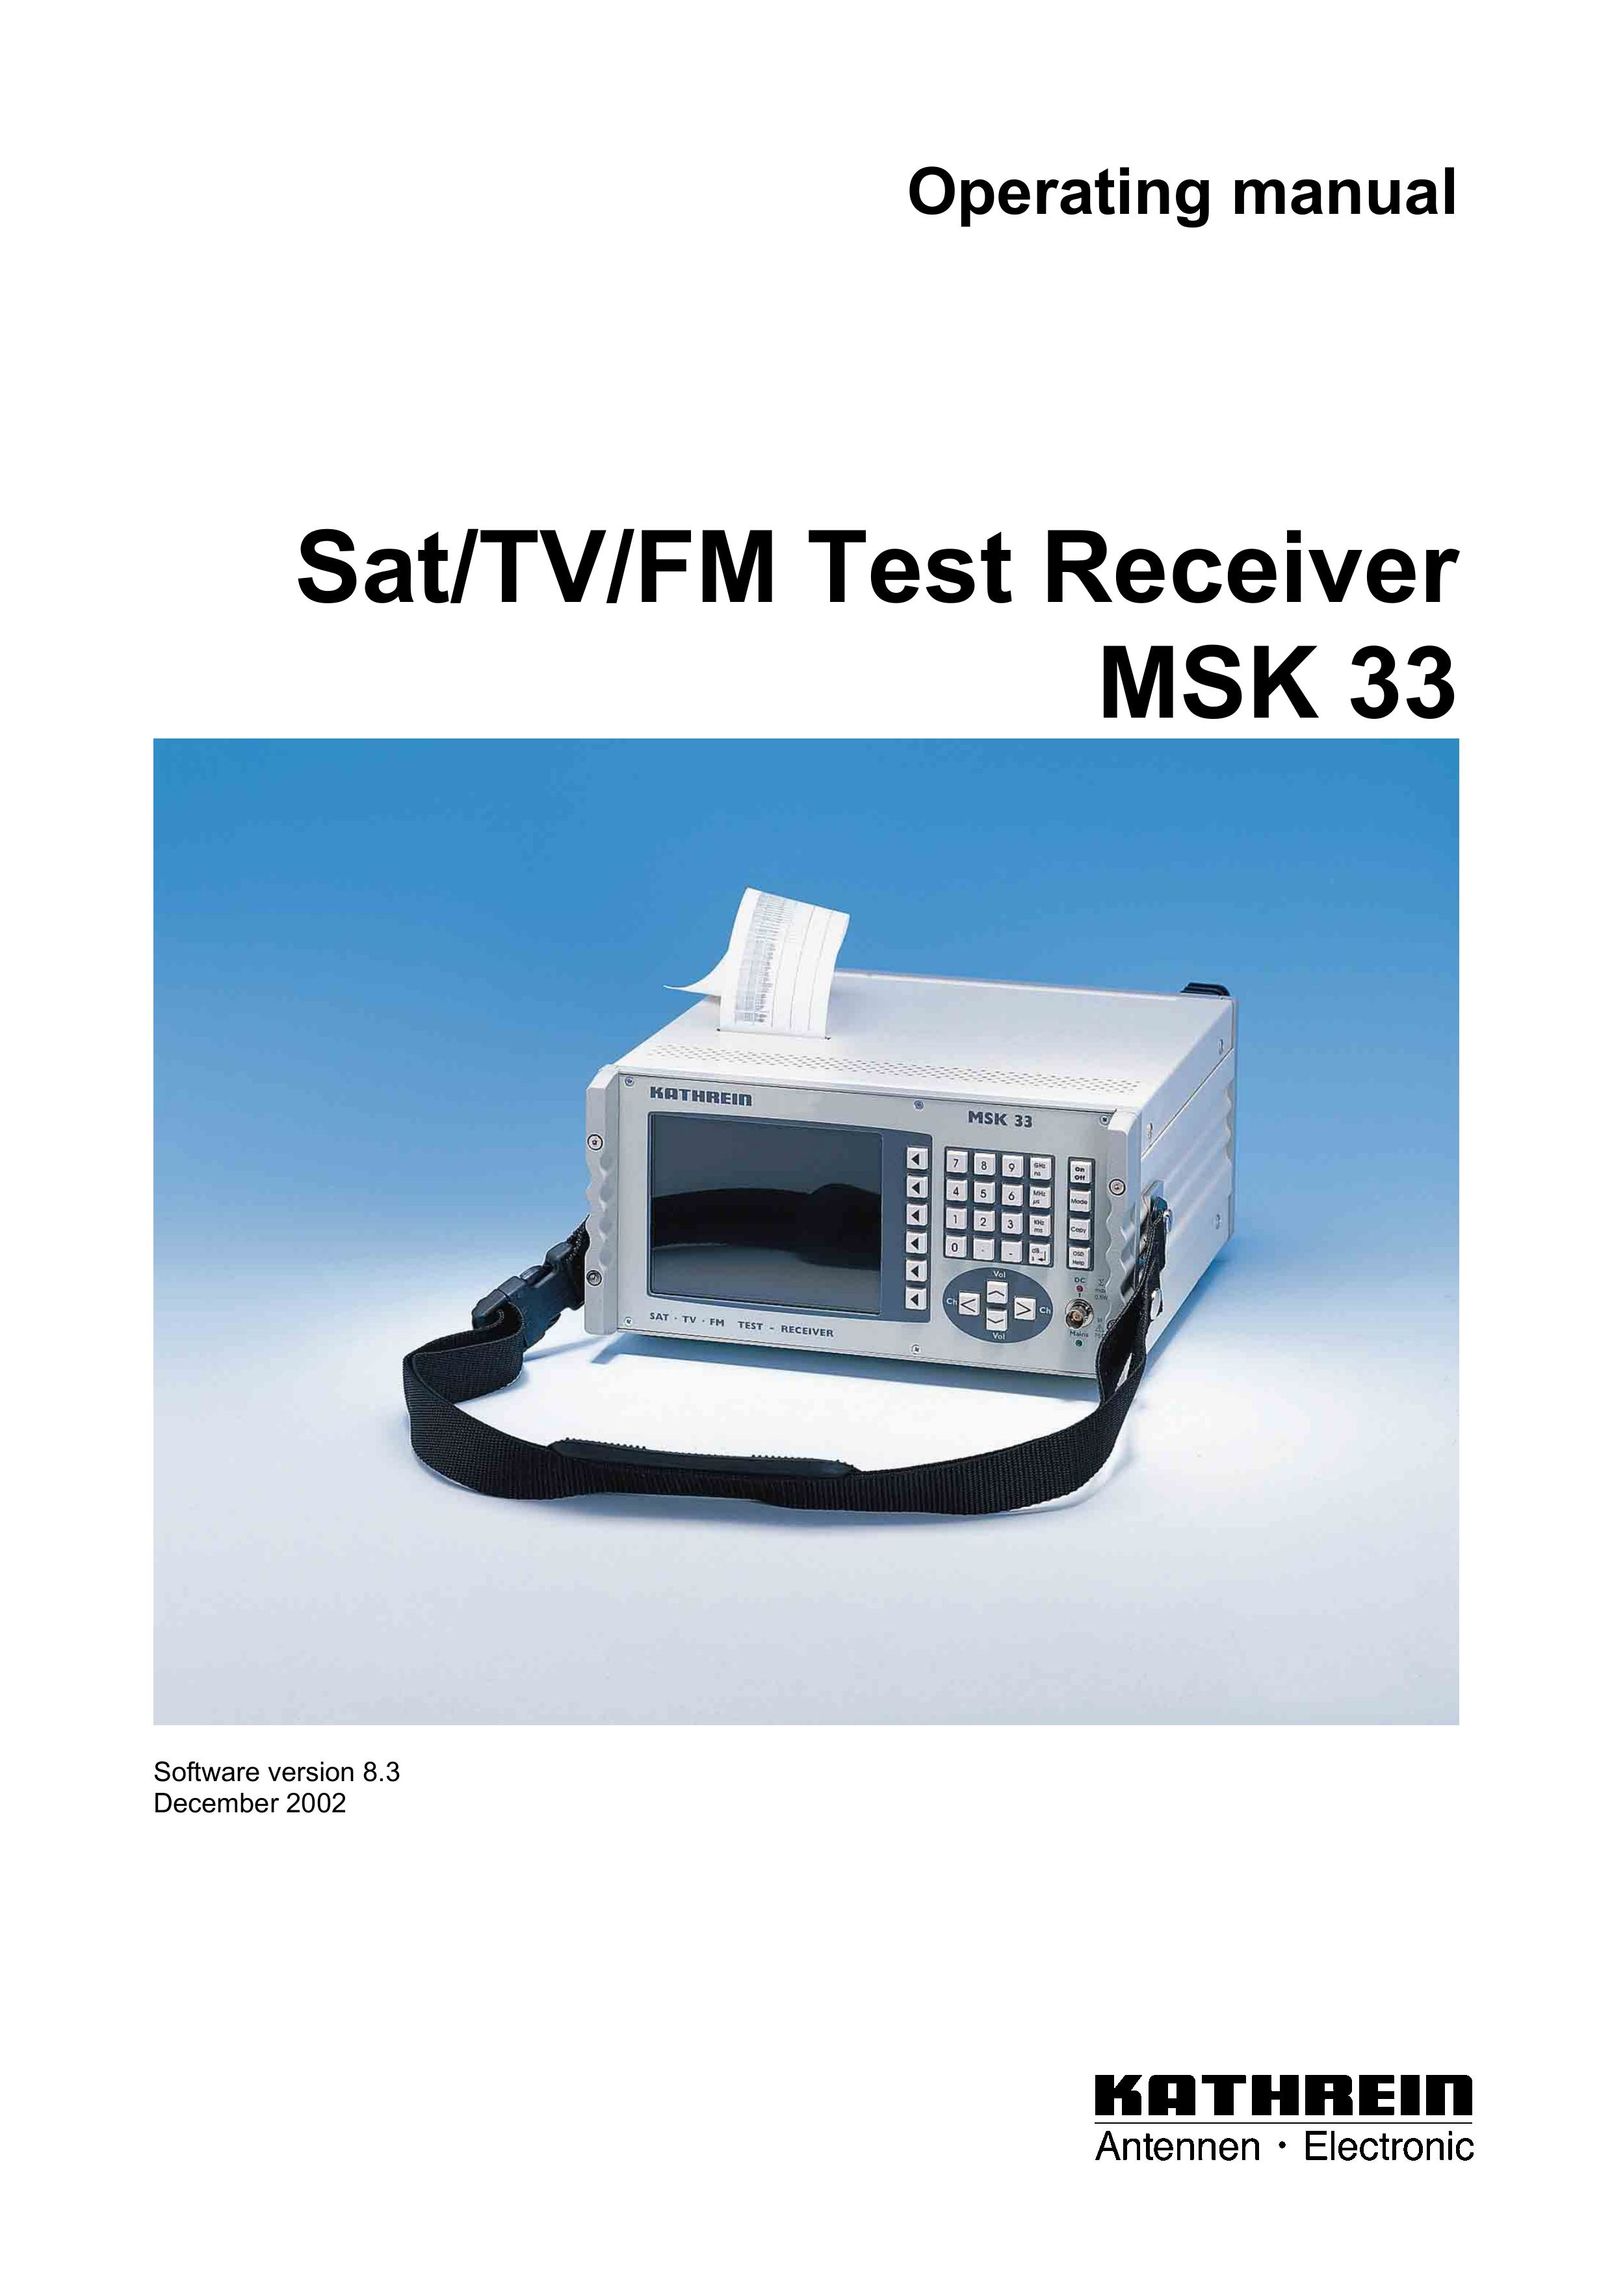 Kathrein 9986492 Satellite TV System User Manual